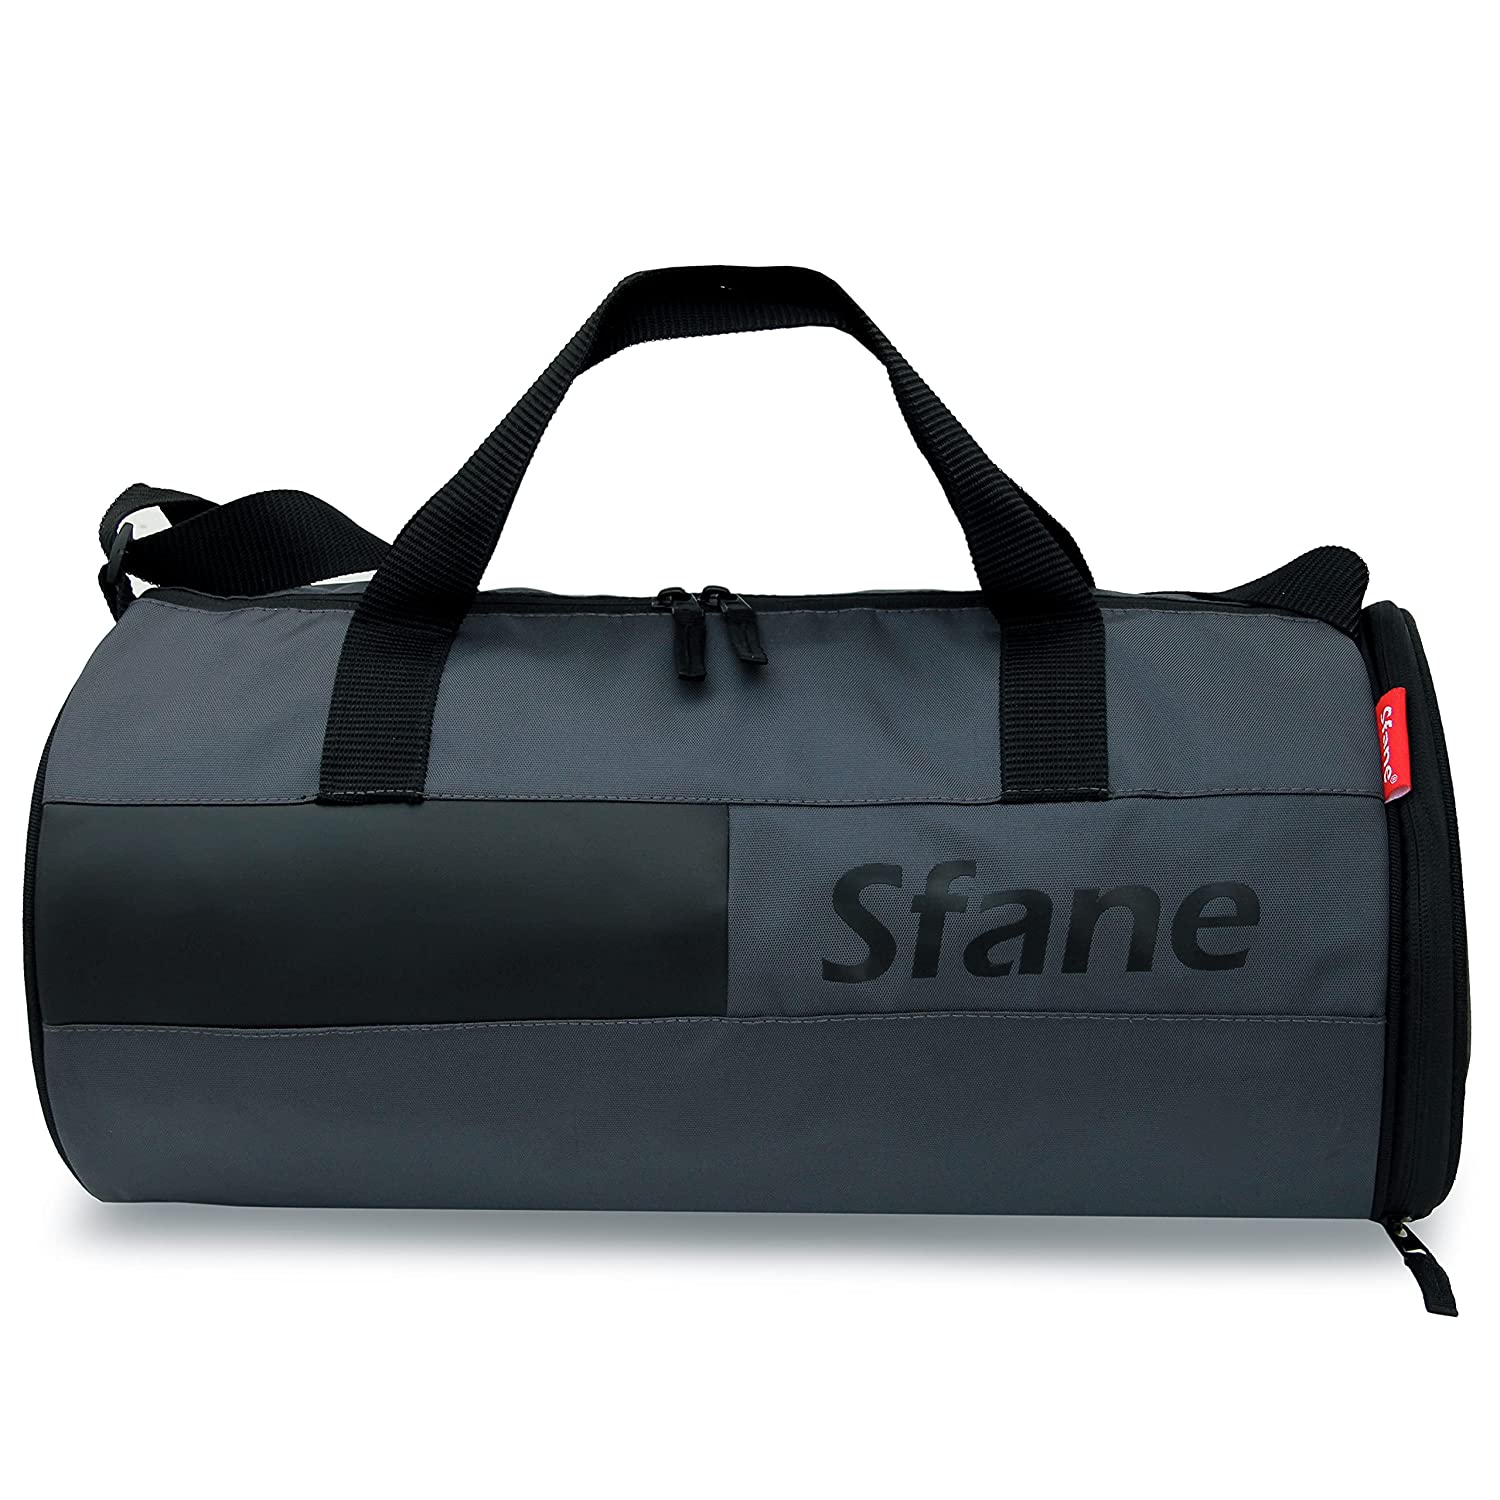 Shane polyester duffle gym bag